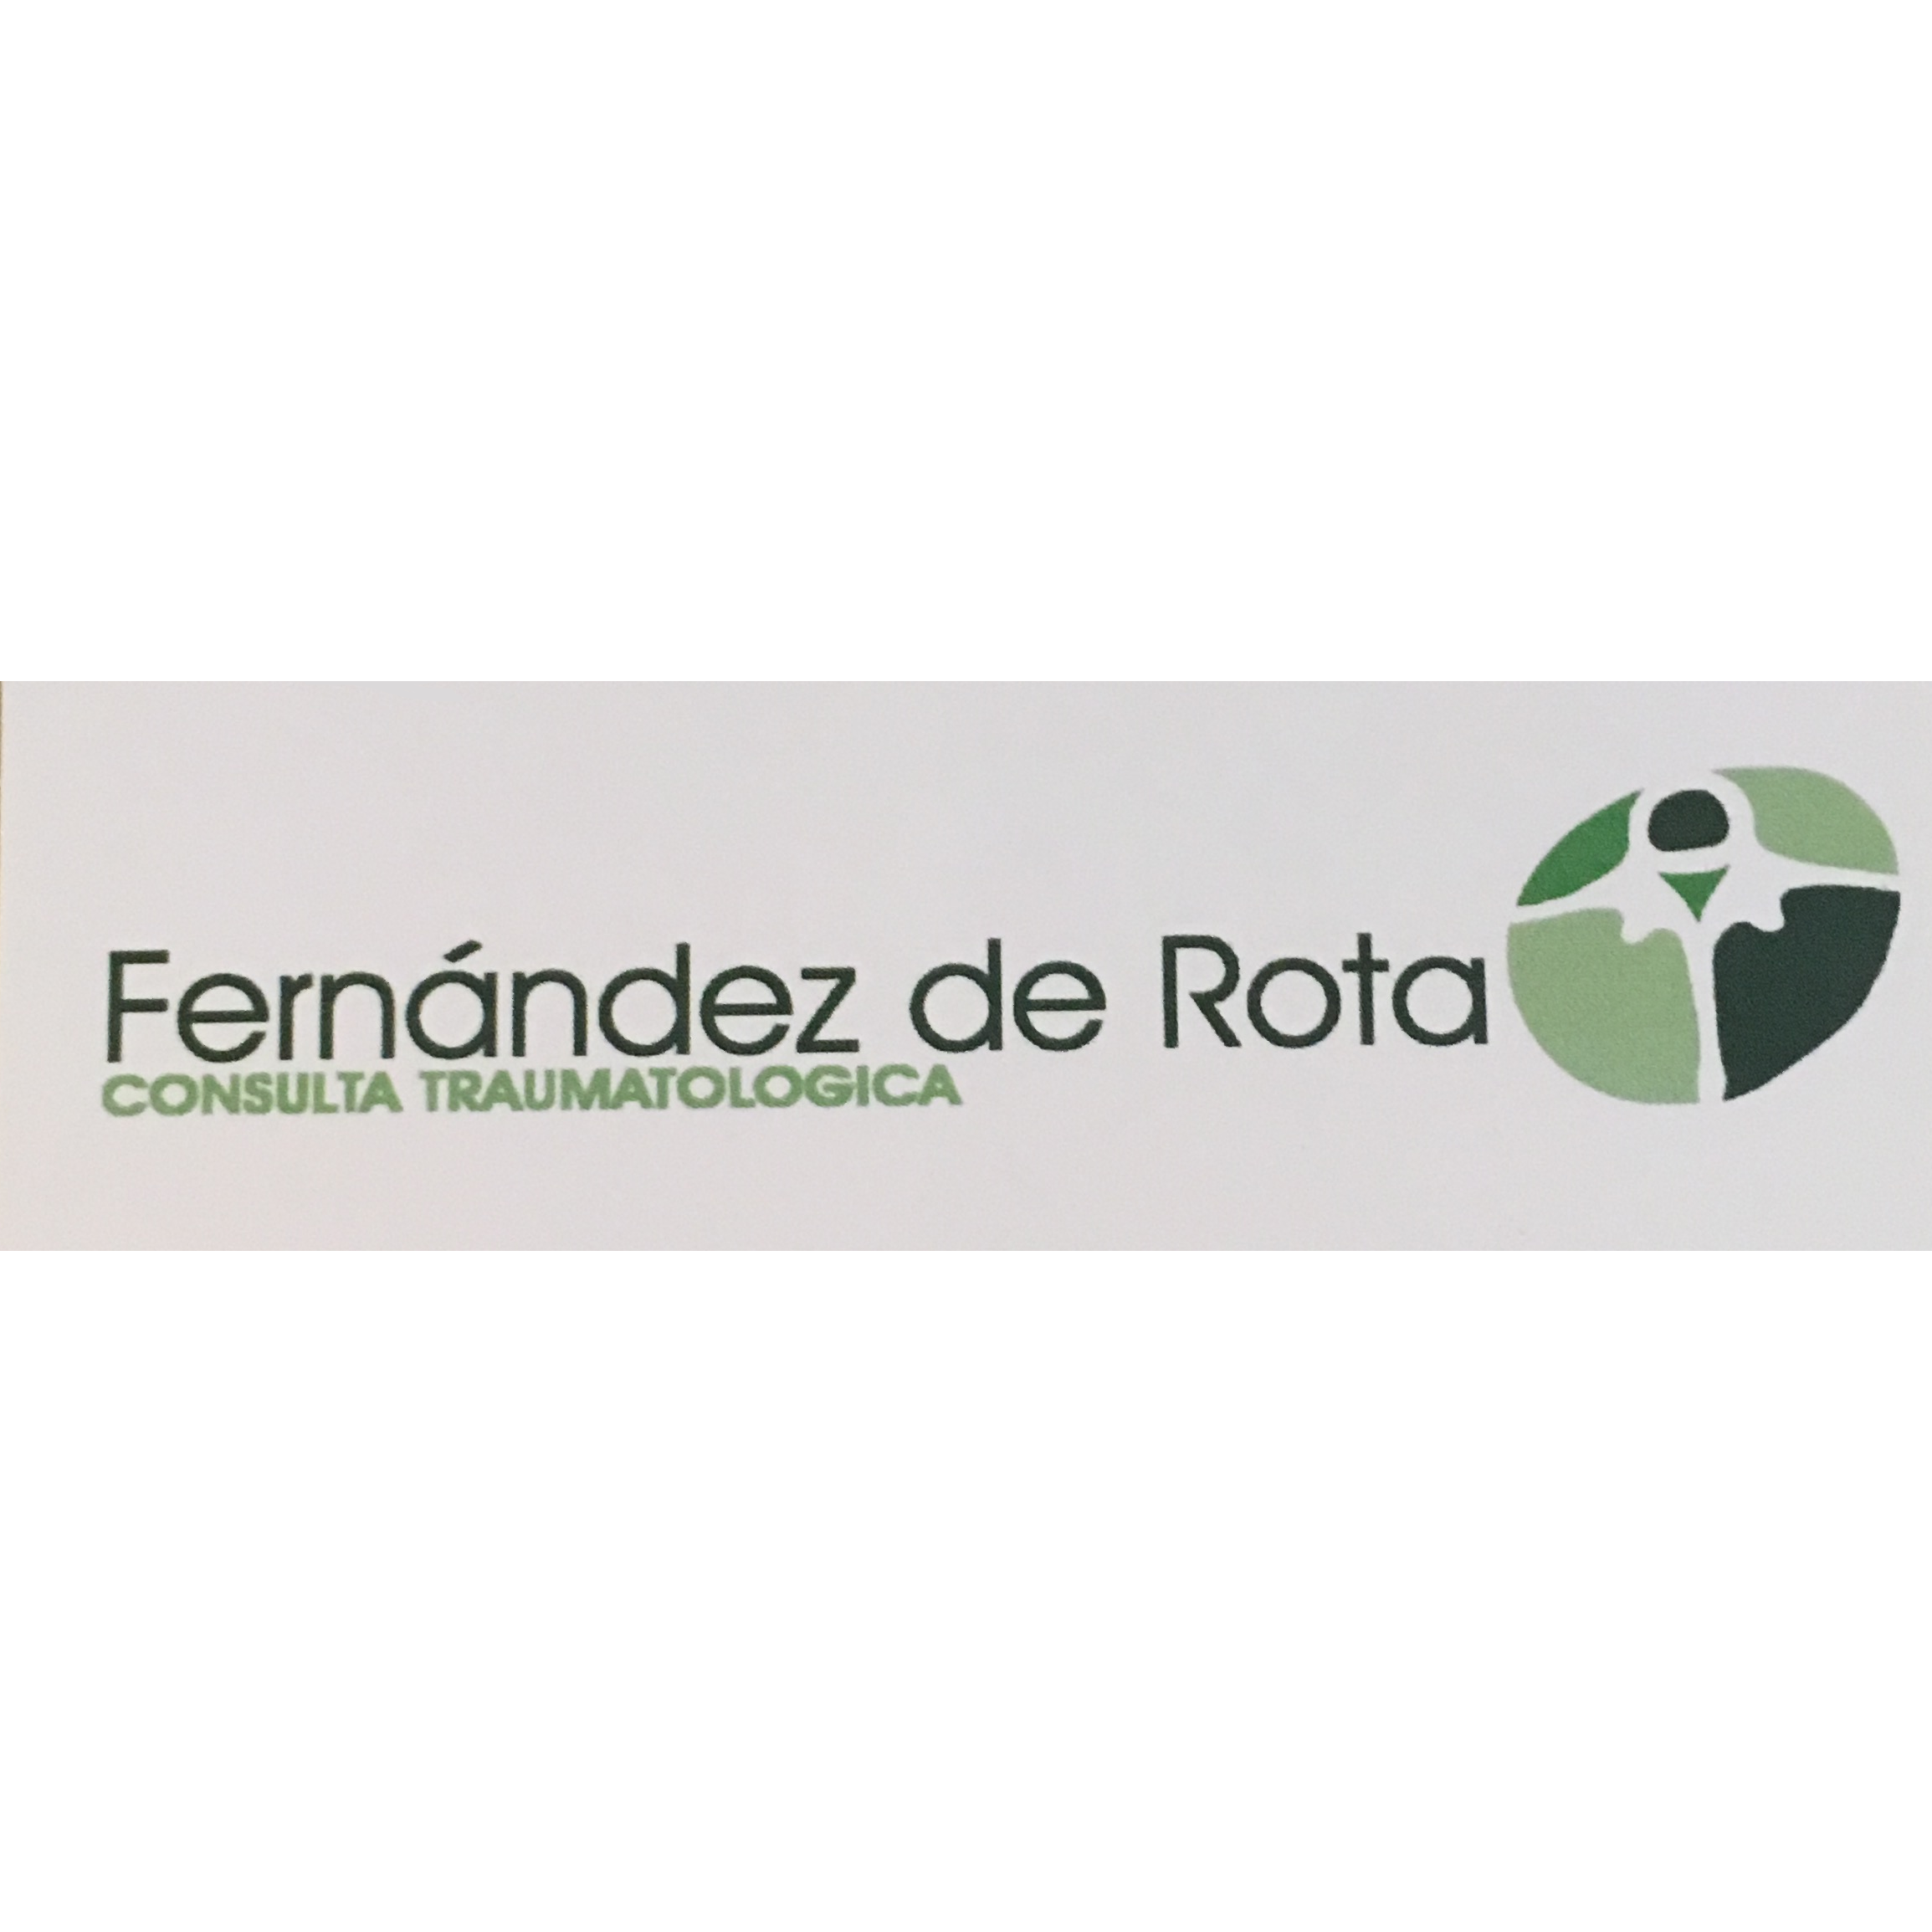 Dr. Juan José Fernández de Rota Avecilla Traumatólogo. Logo